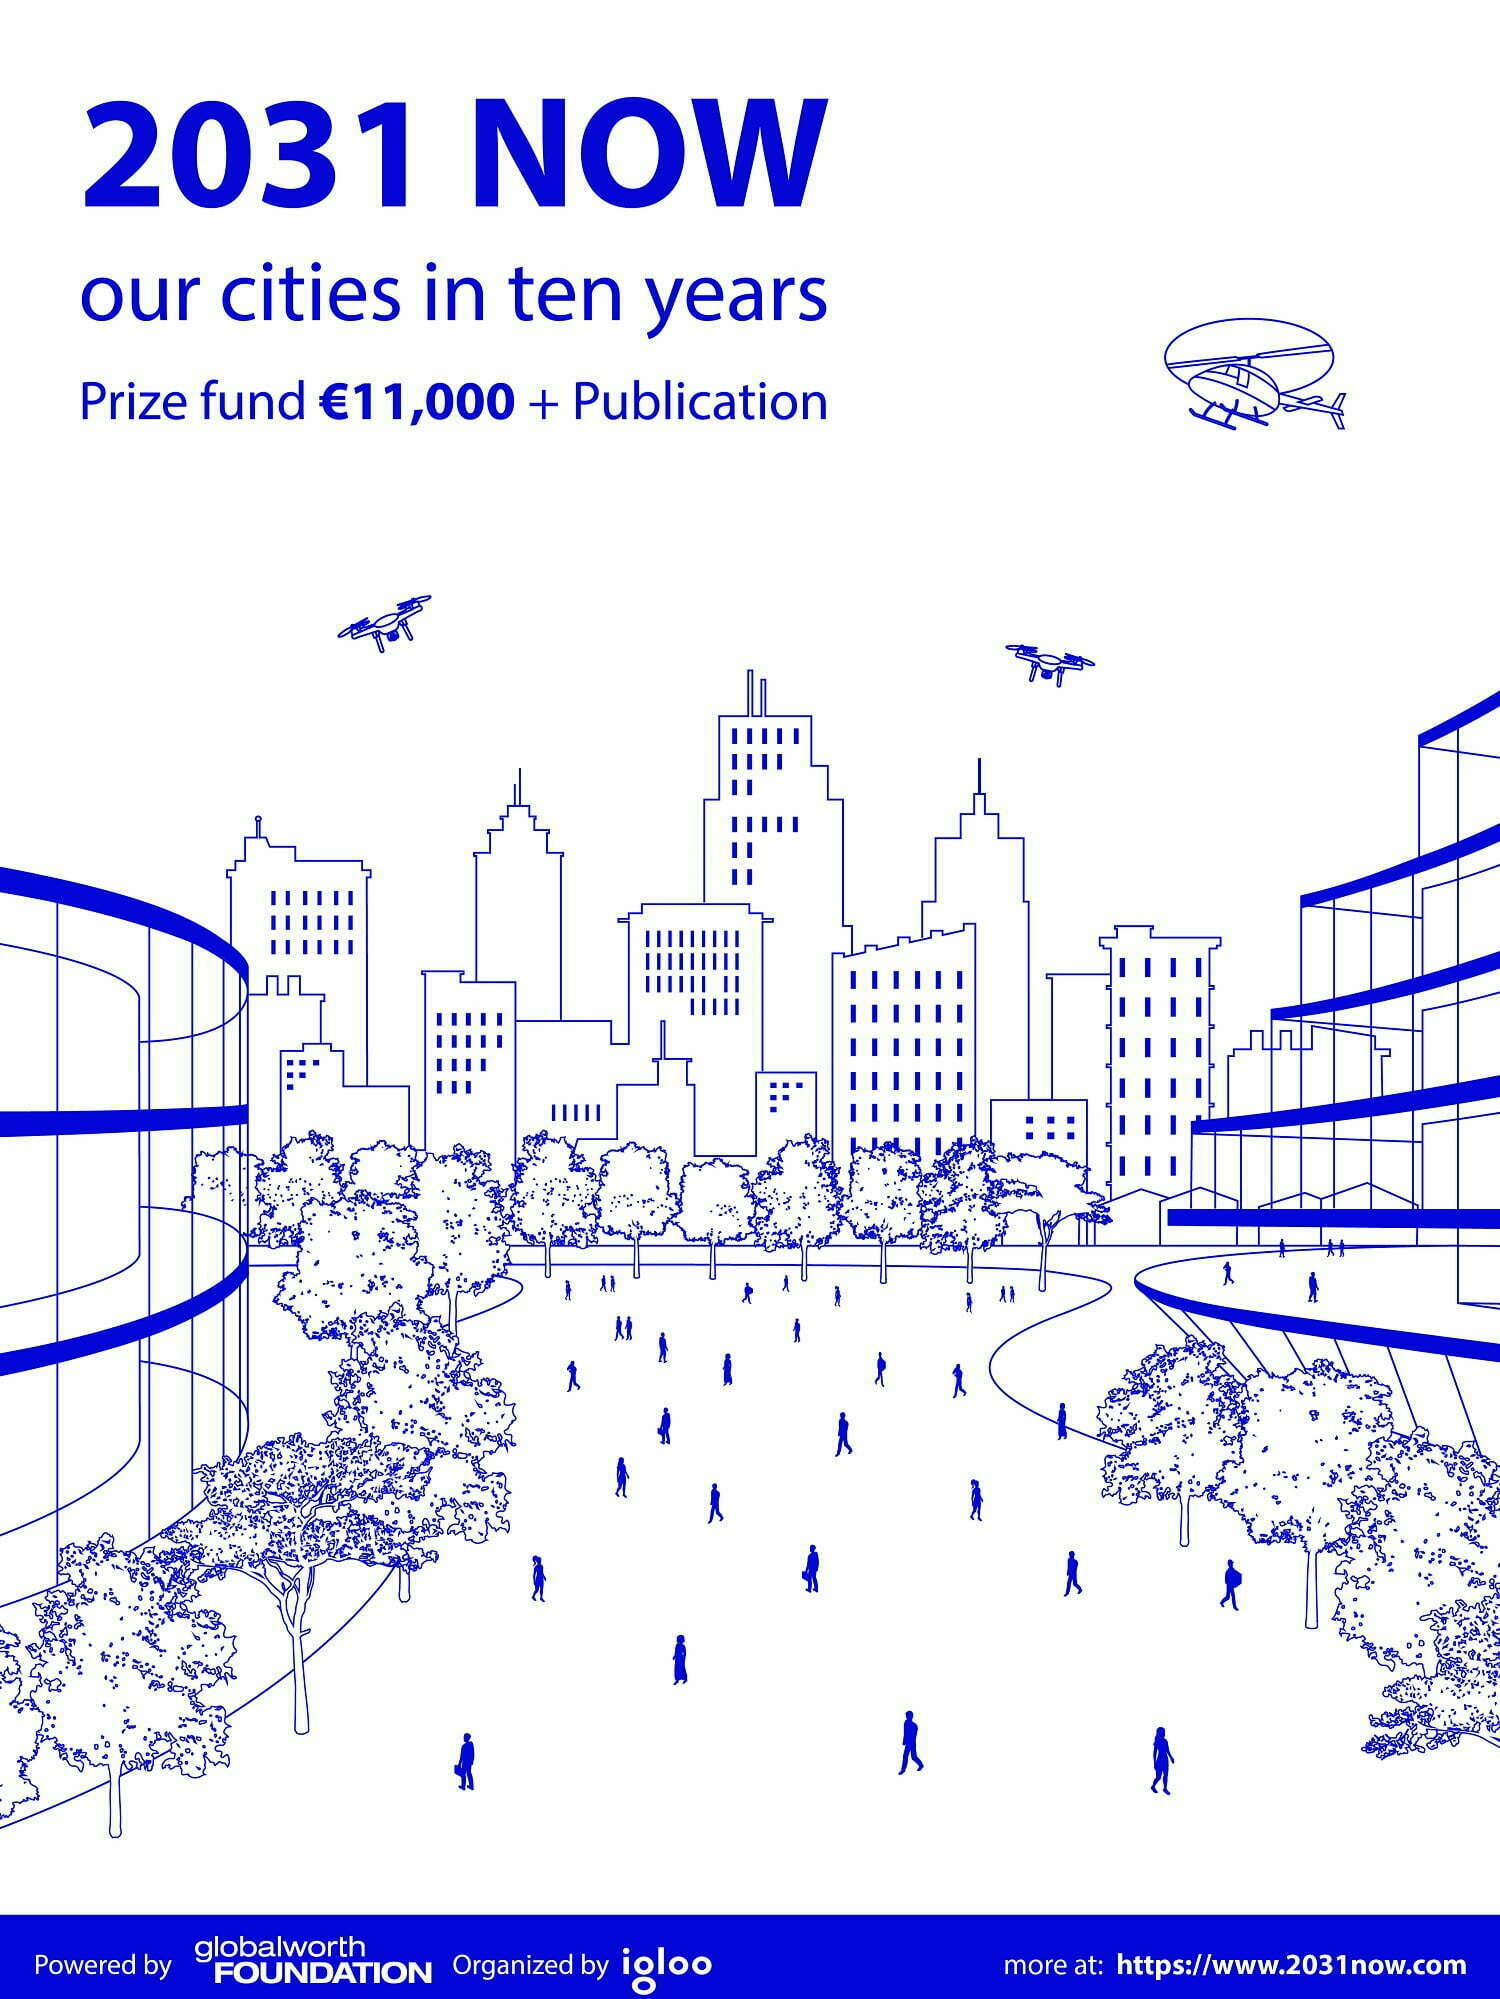 Fundația Globalworth și Igloo au lansat competiția internațională 2031 NOW_our cities in 10 years